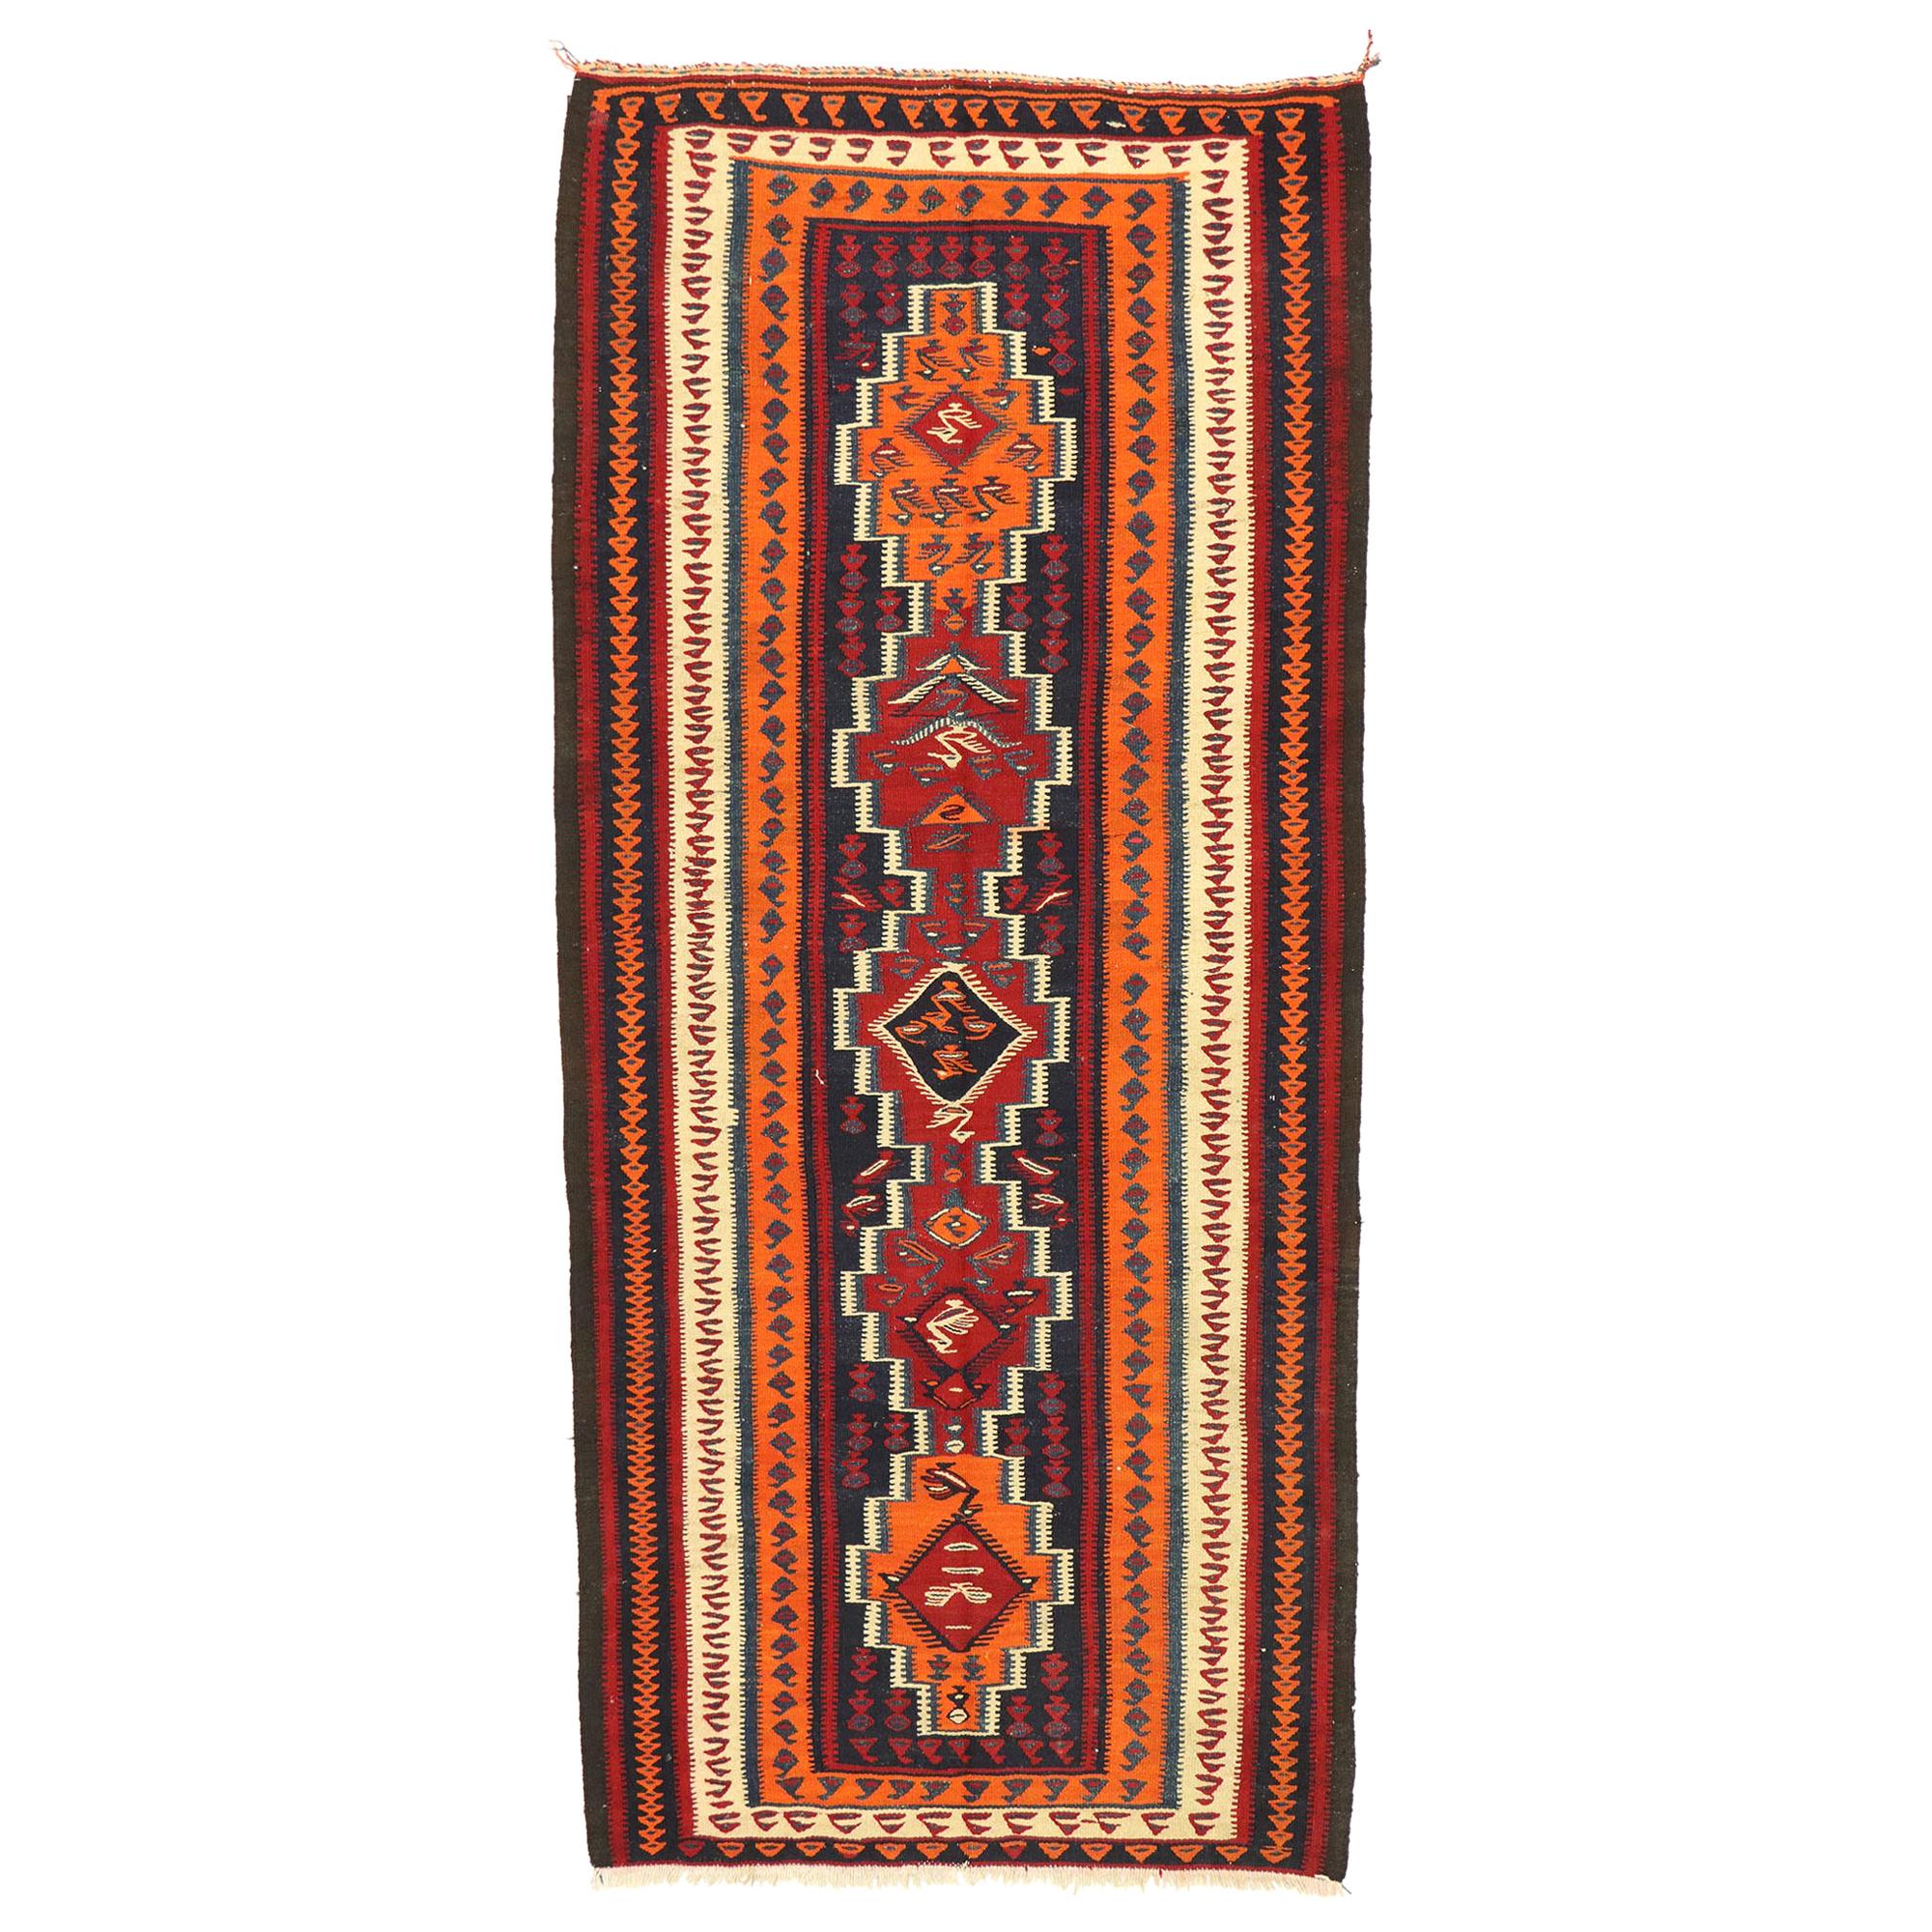 Vintage Persian Bijar Kilim Rug with Modern Northwestern Tribal Style